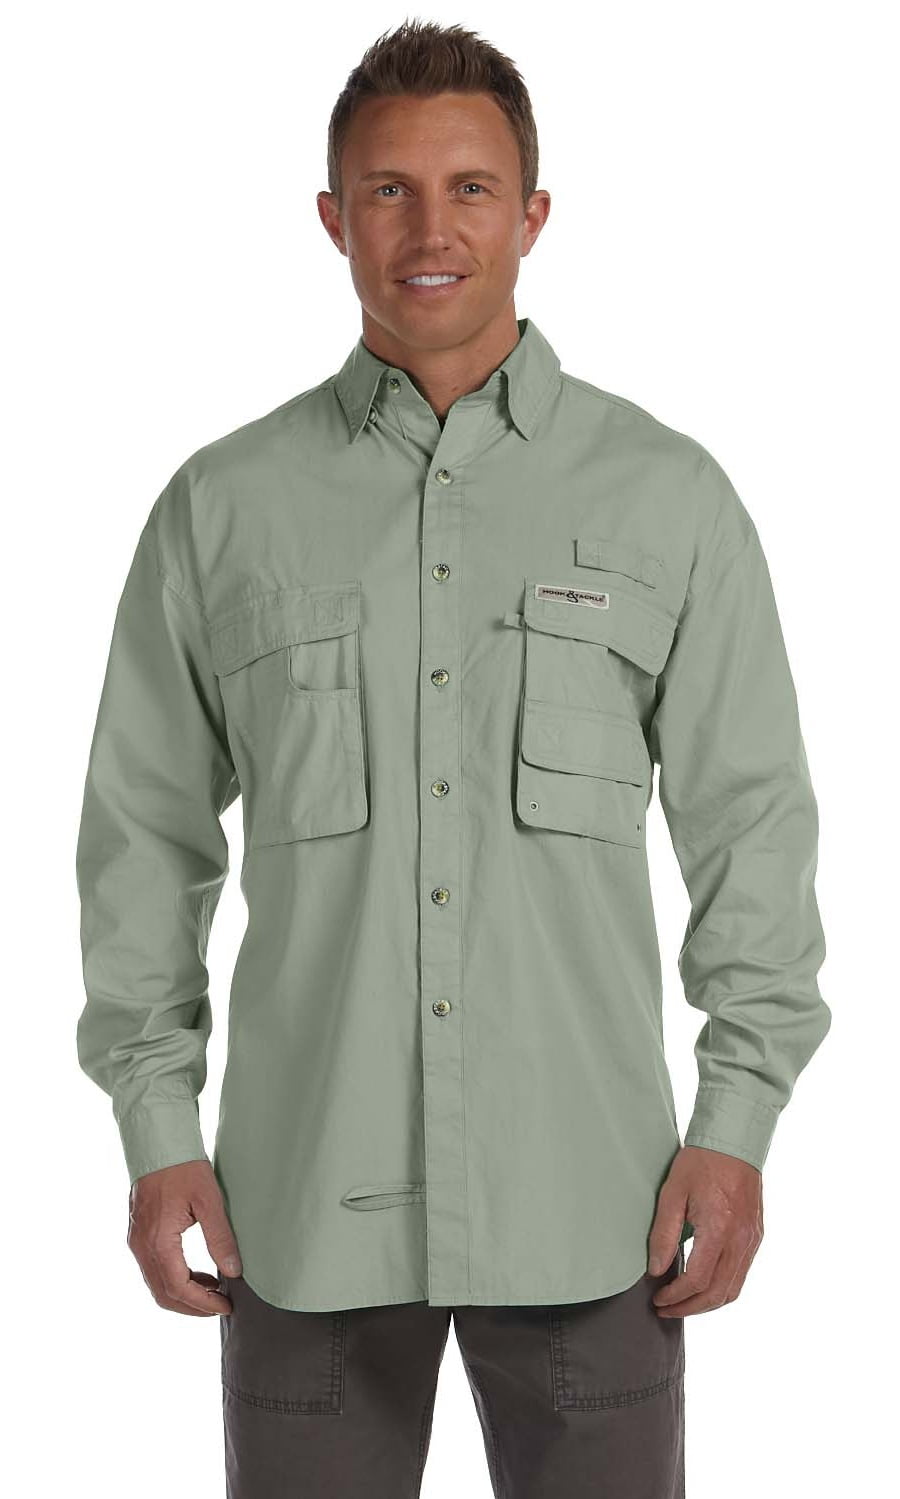 Hook & Tackle Button Up Shirt 1013L Gulf Long-Sleeve Fishing